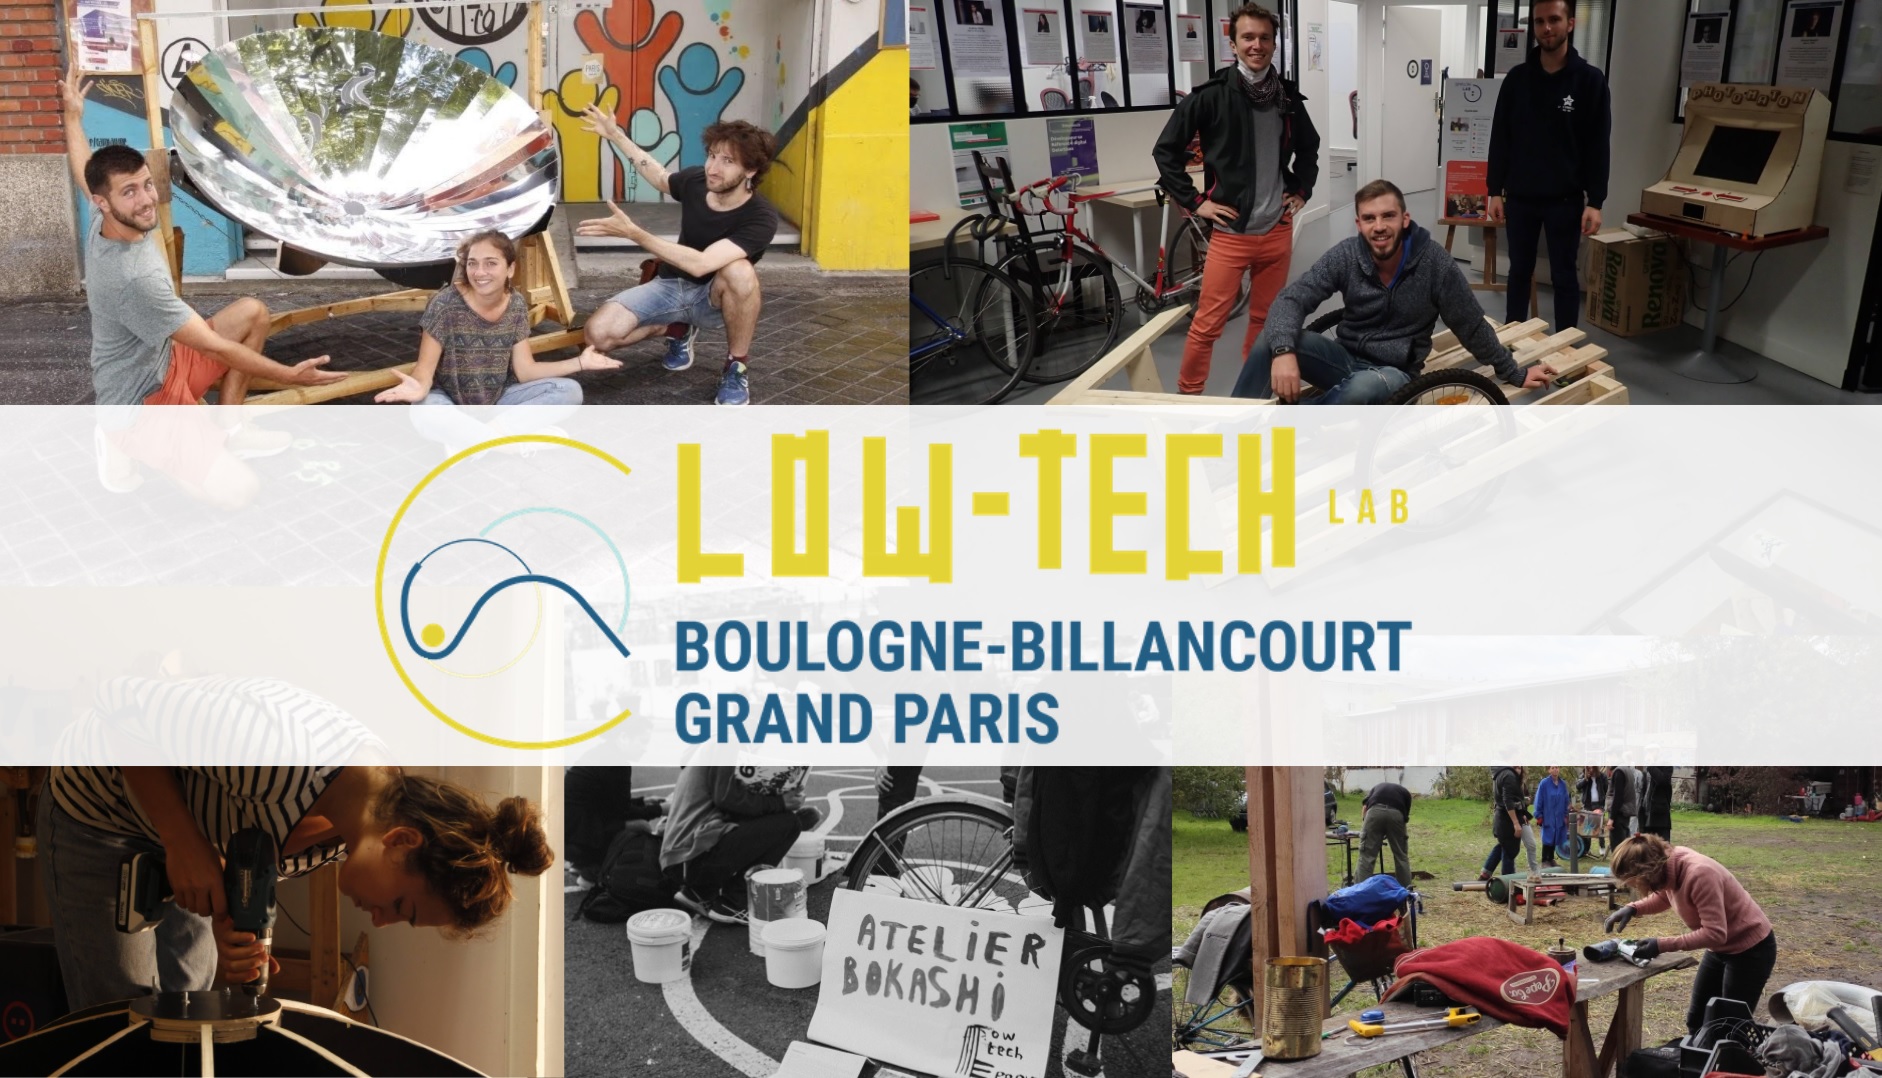 Group-Low-tech Lab Boulogne-Billancourt Grand Paris 154534999 253169043012834 3707056565889920700 o.jpg